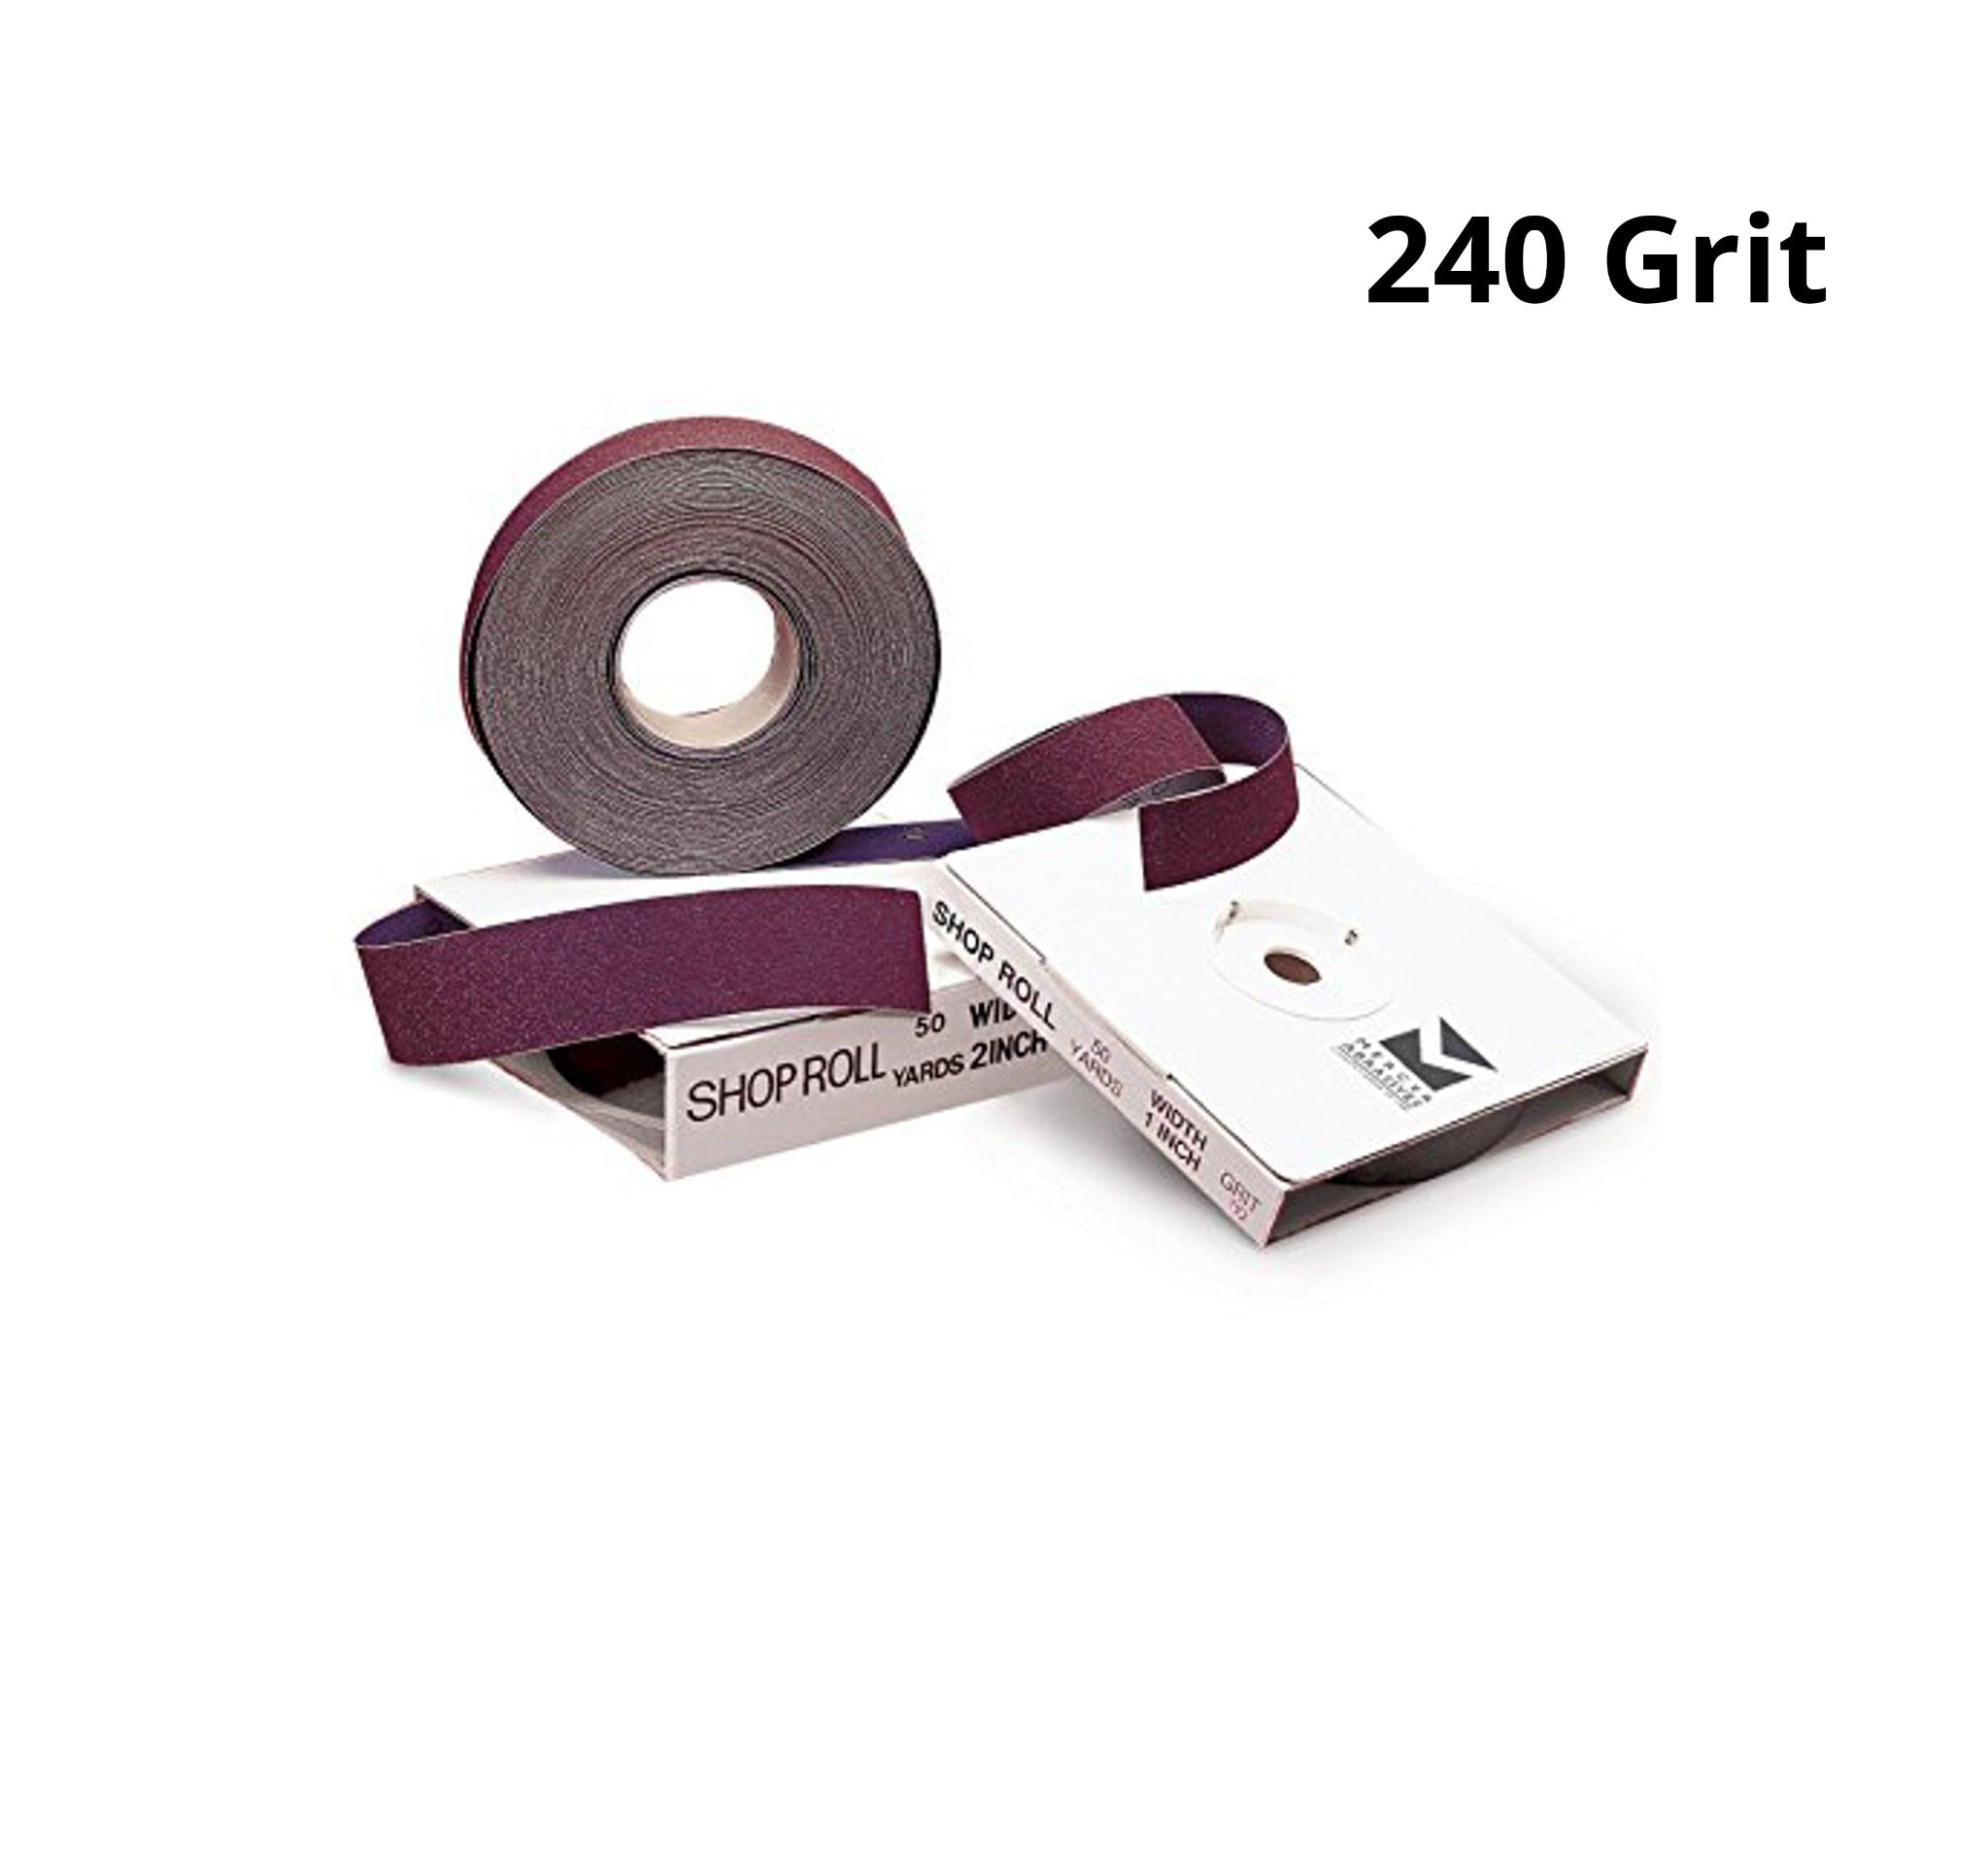 Aluminum Oxide Shop Roll 240 Grit 1” X 50 Yds